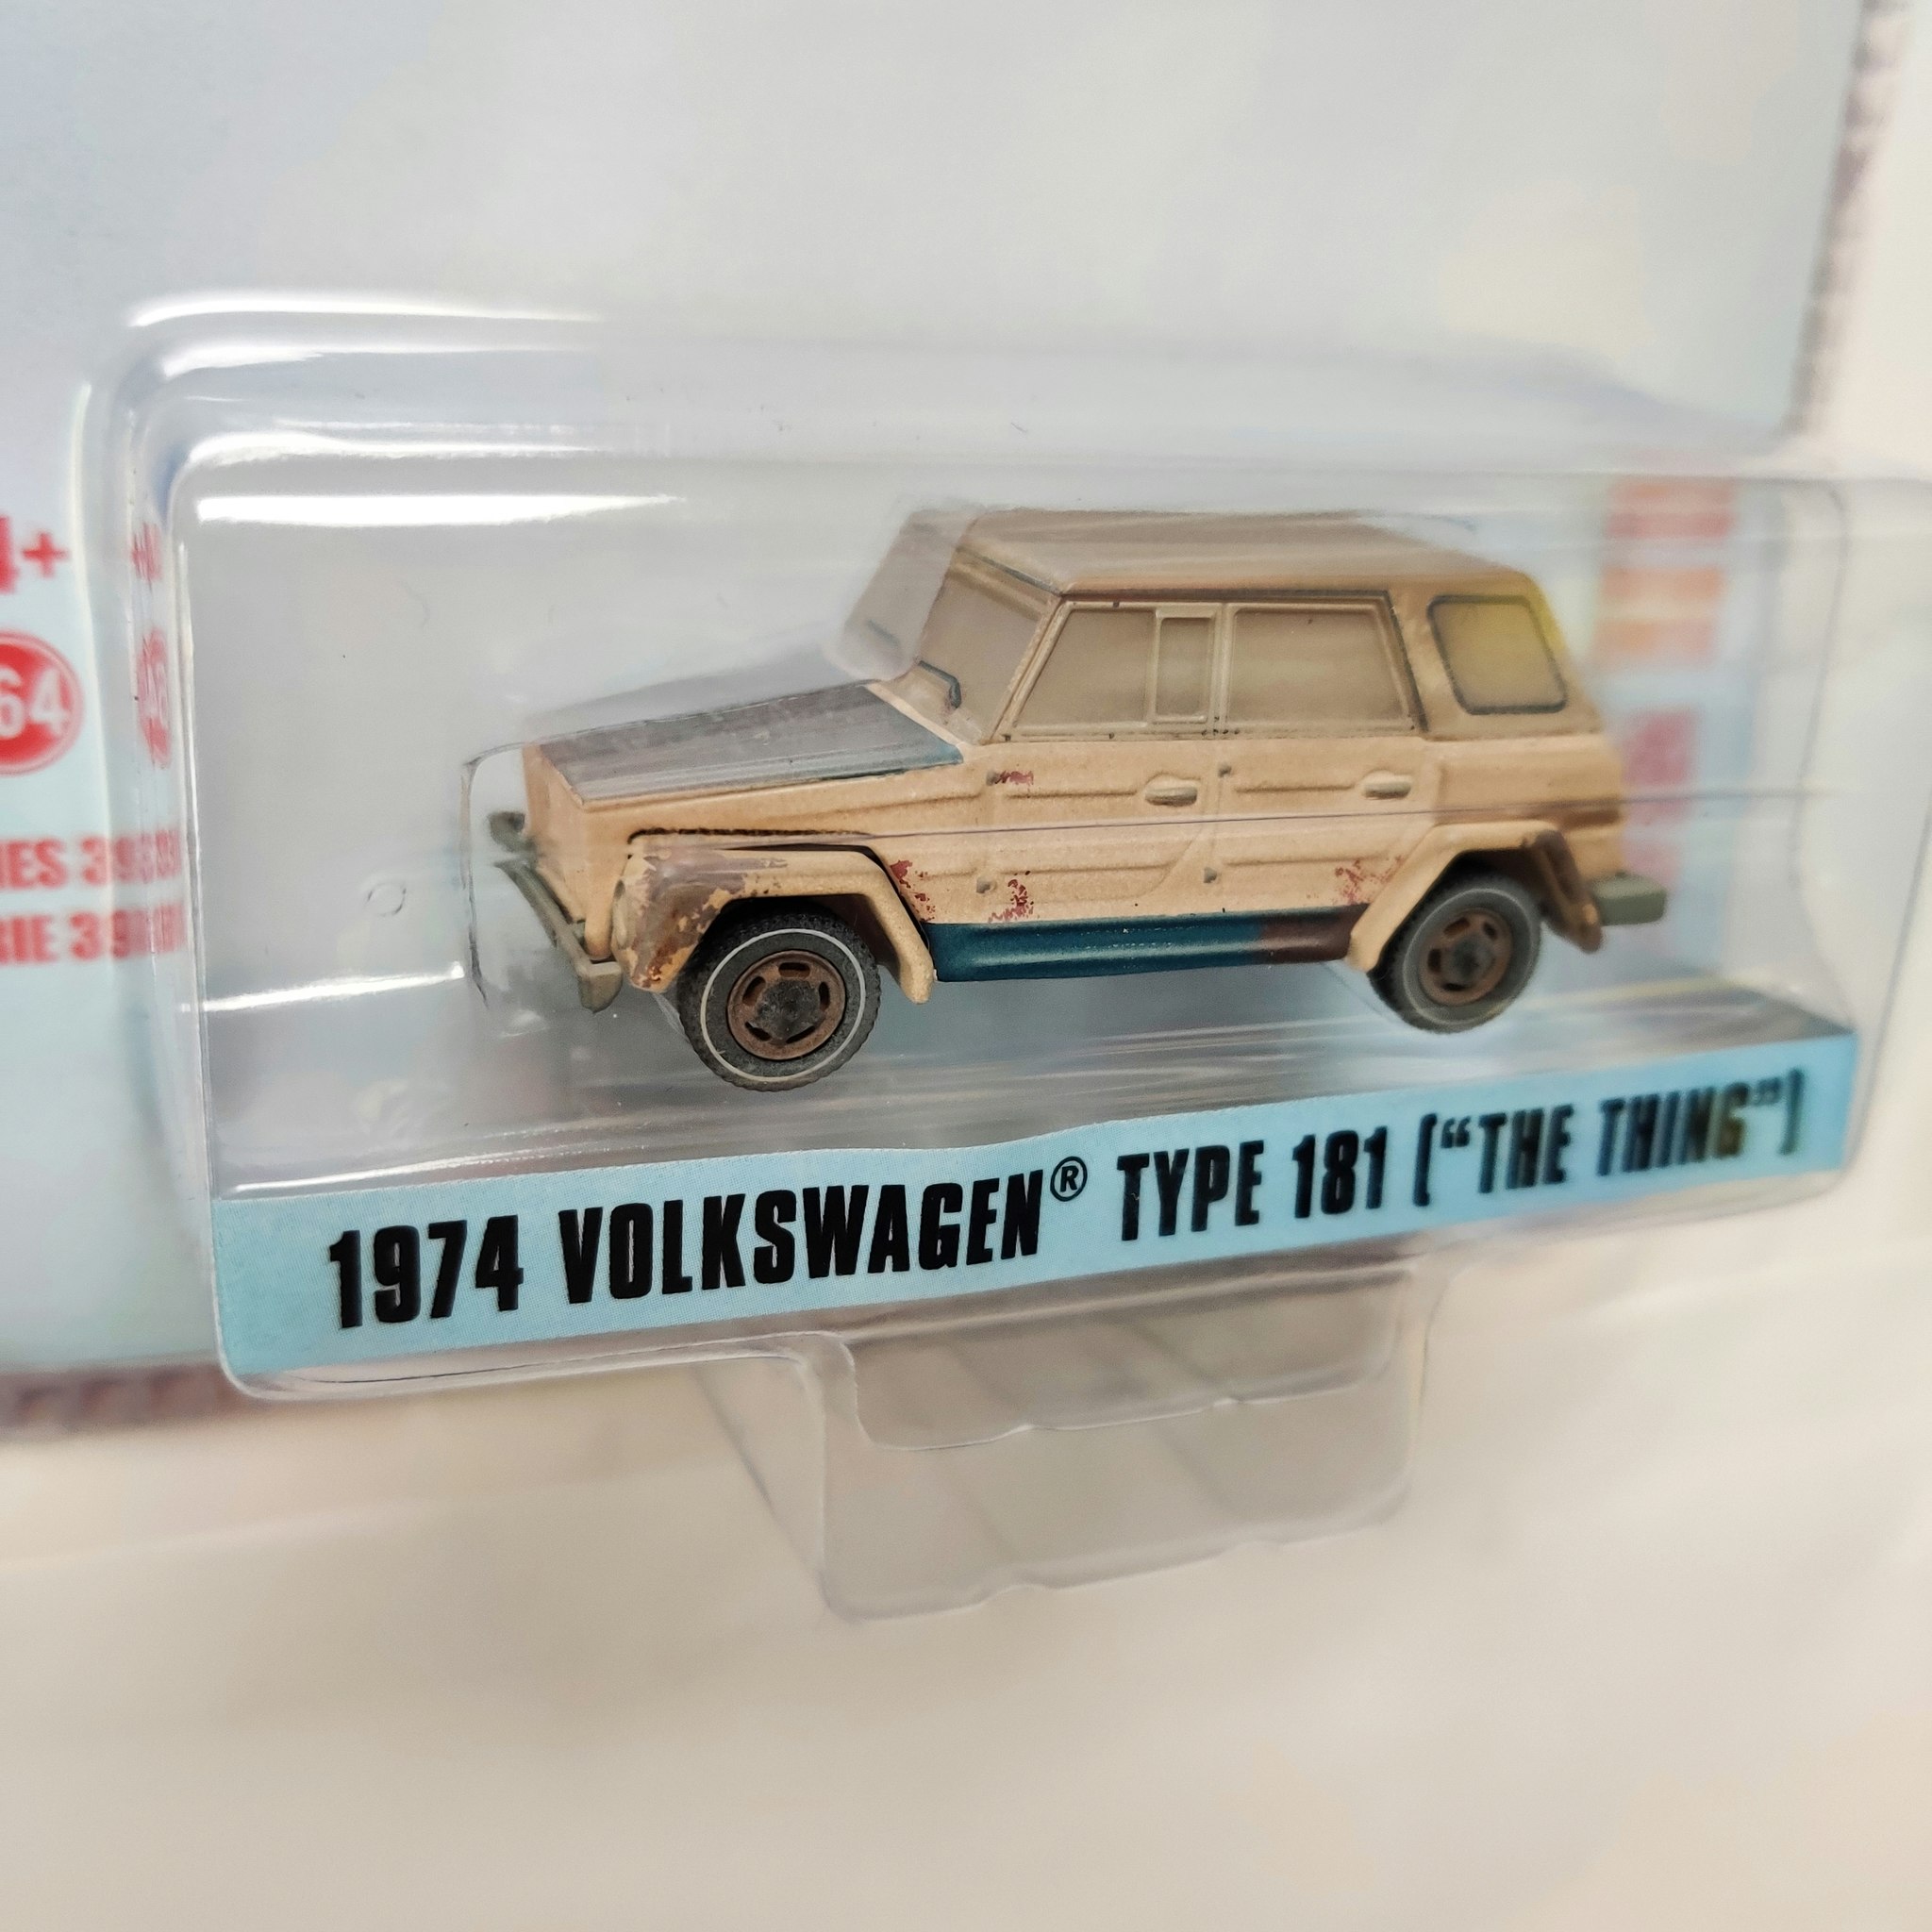 Skala 1/64 Greenlight Hollywood "American Pickers" Volkswagen Type 181 "The Thing" 1974 Ser.